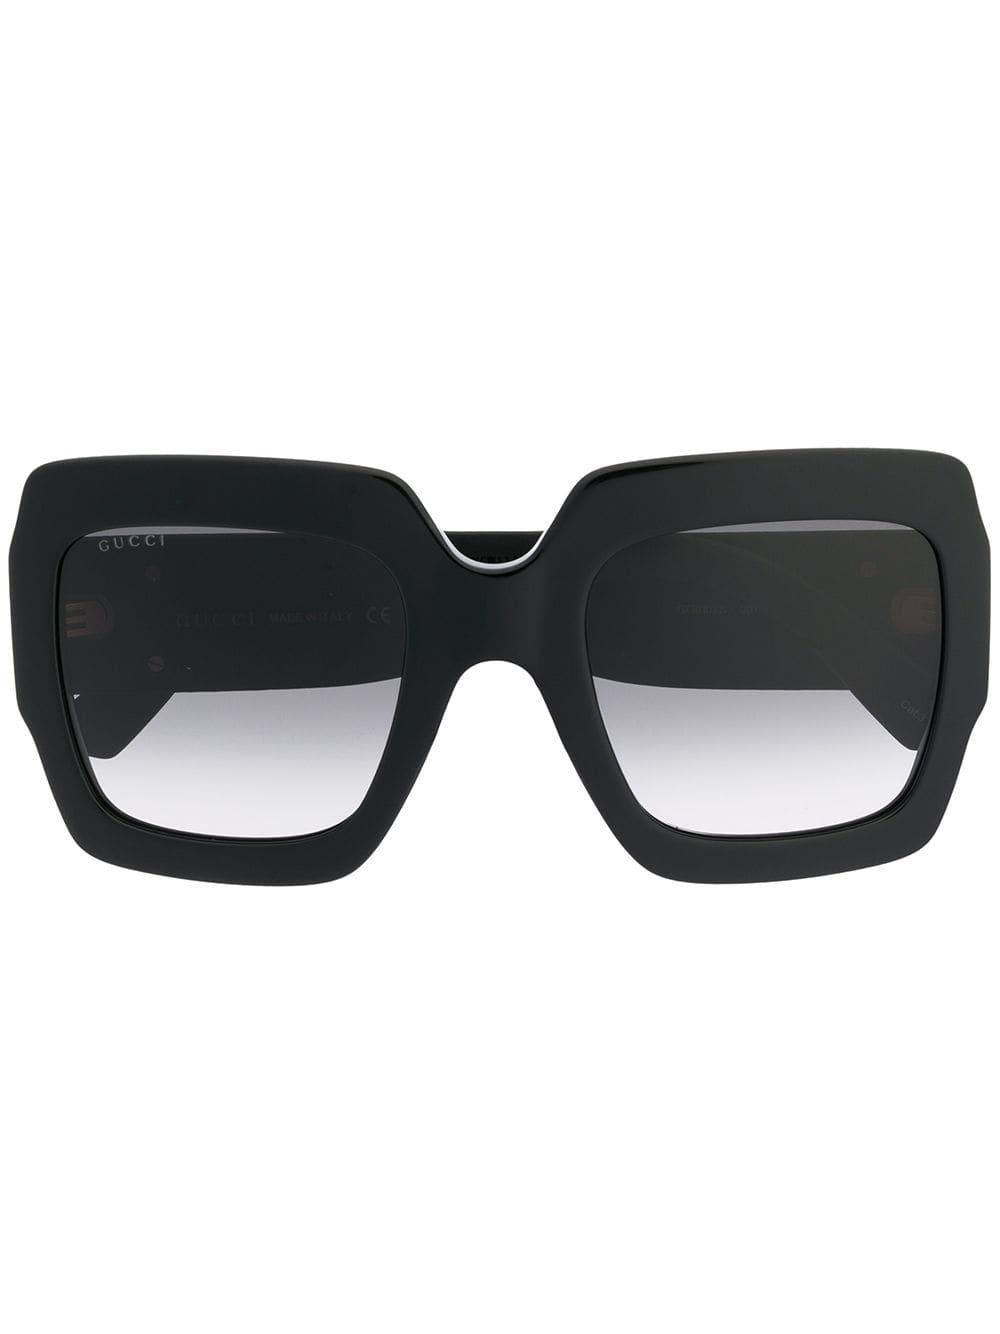 Gucci Oversized Frame Sunglasses in Black for Men - Lyst